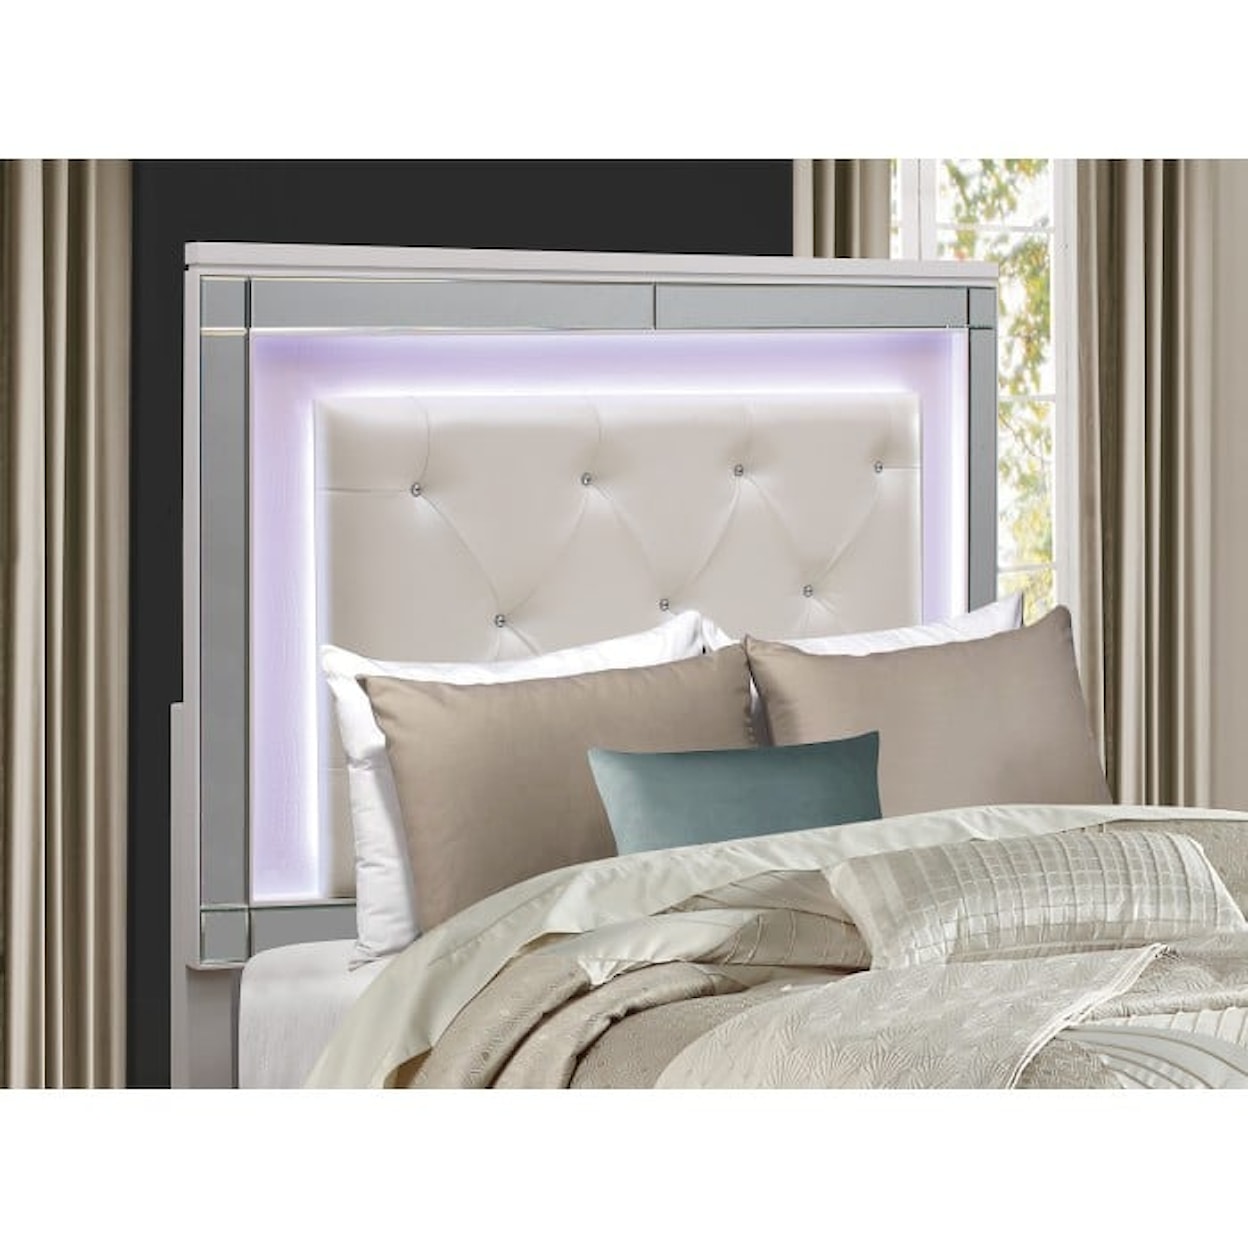 Homelegance Alonza Cali. King Bed with LED Lighting